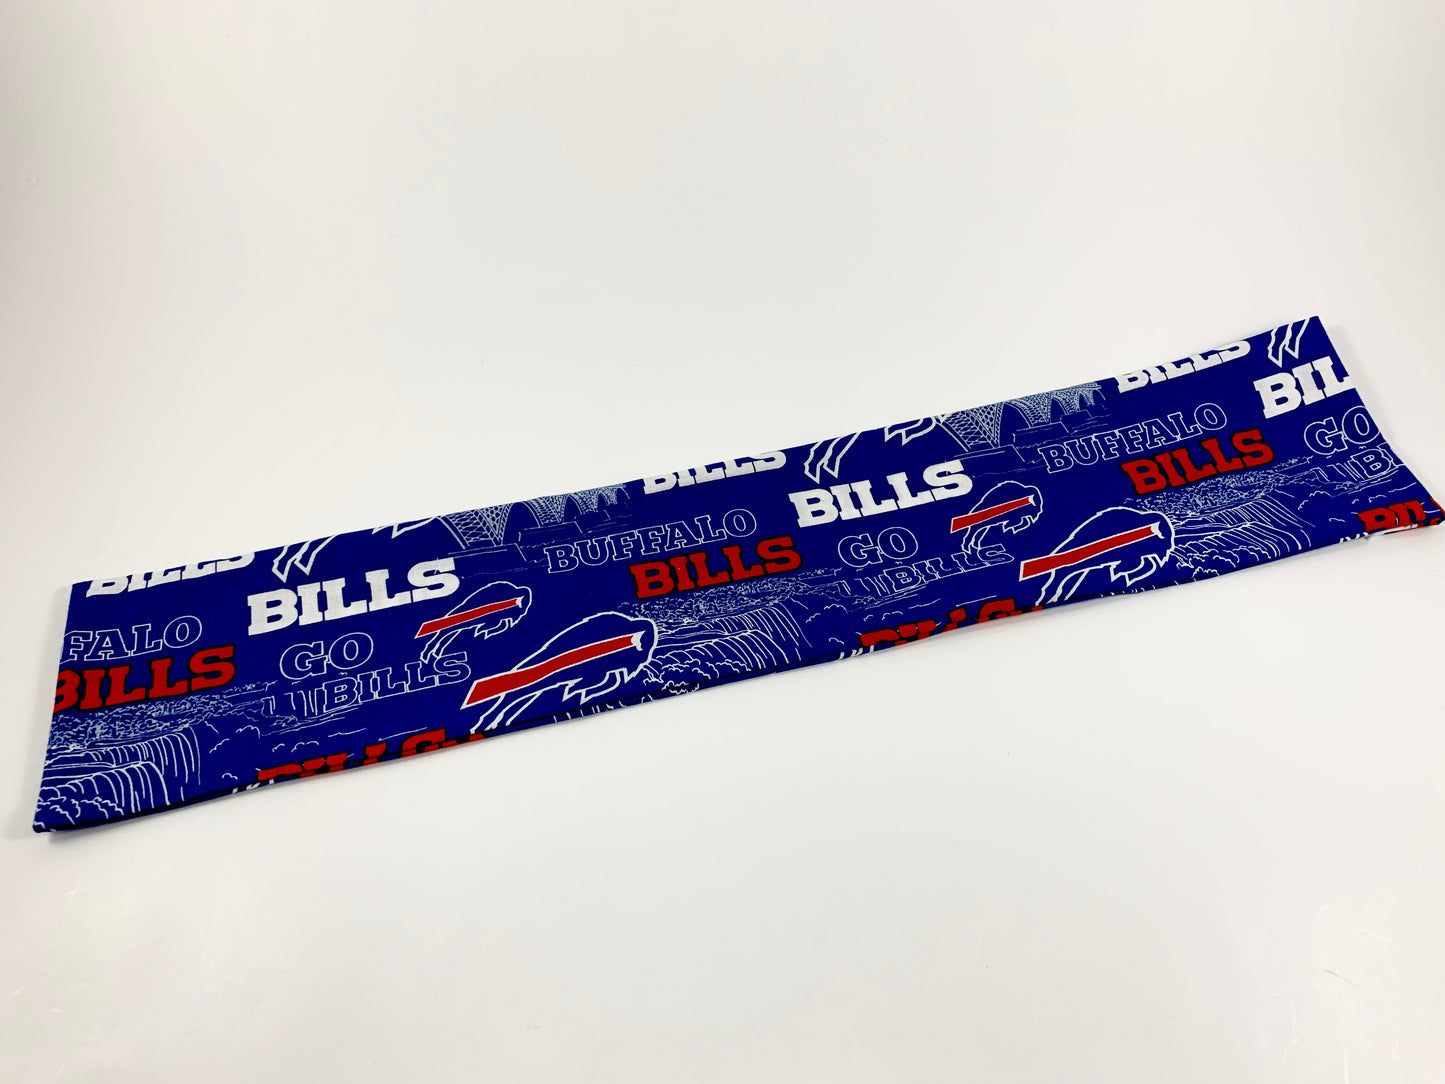 Buffalo Bills Standard Sized Heat Pack